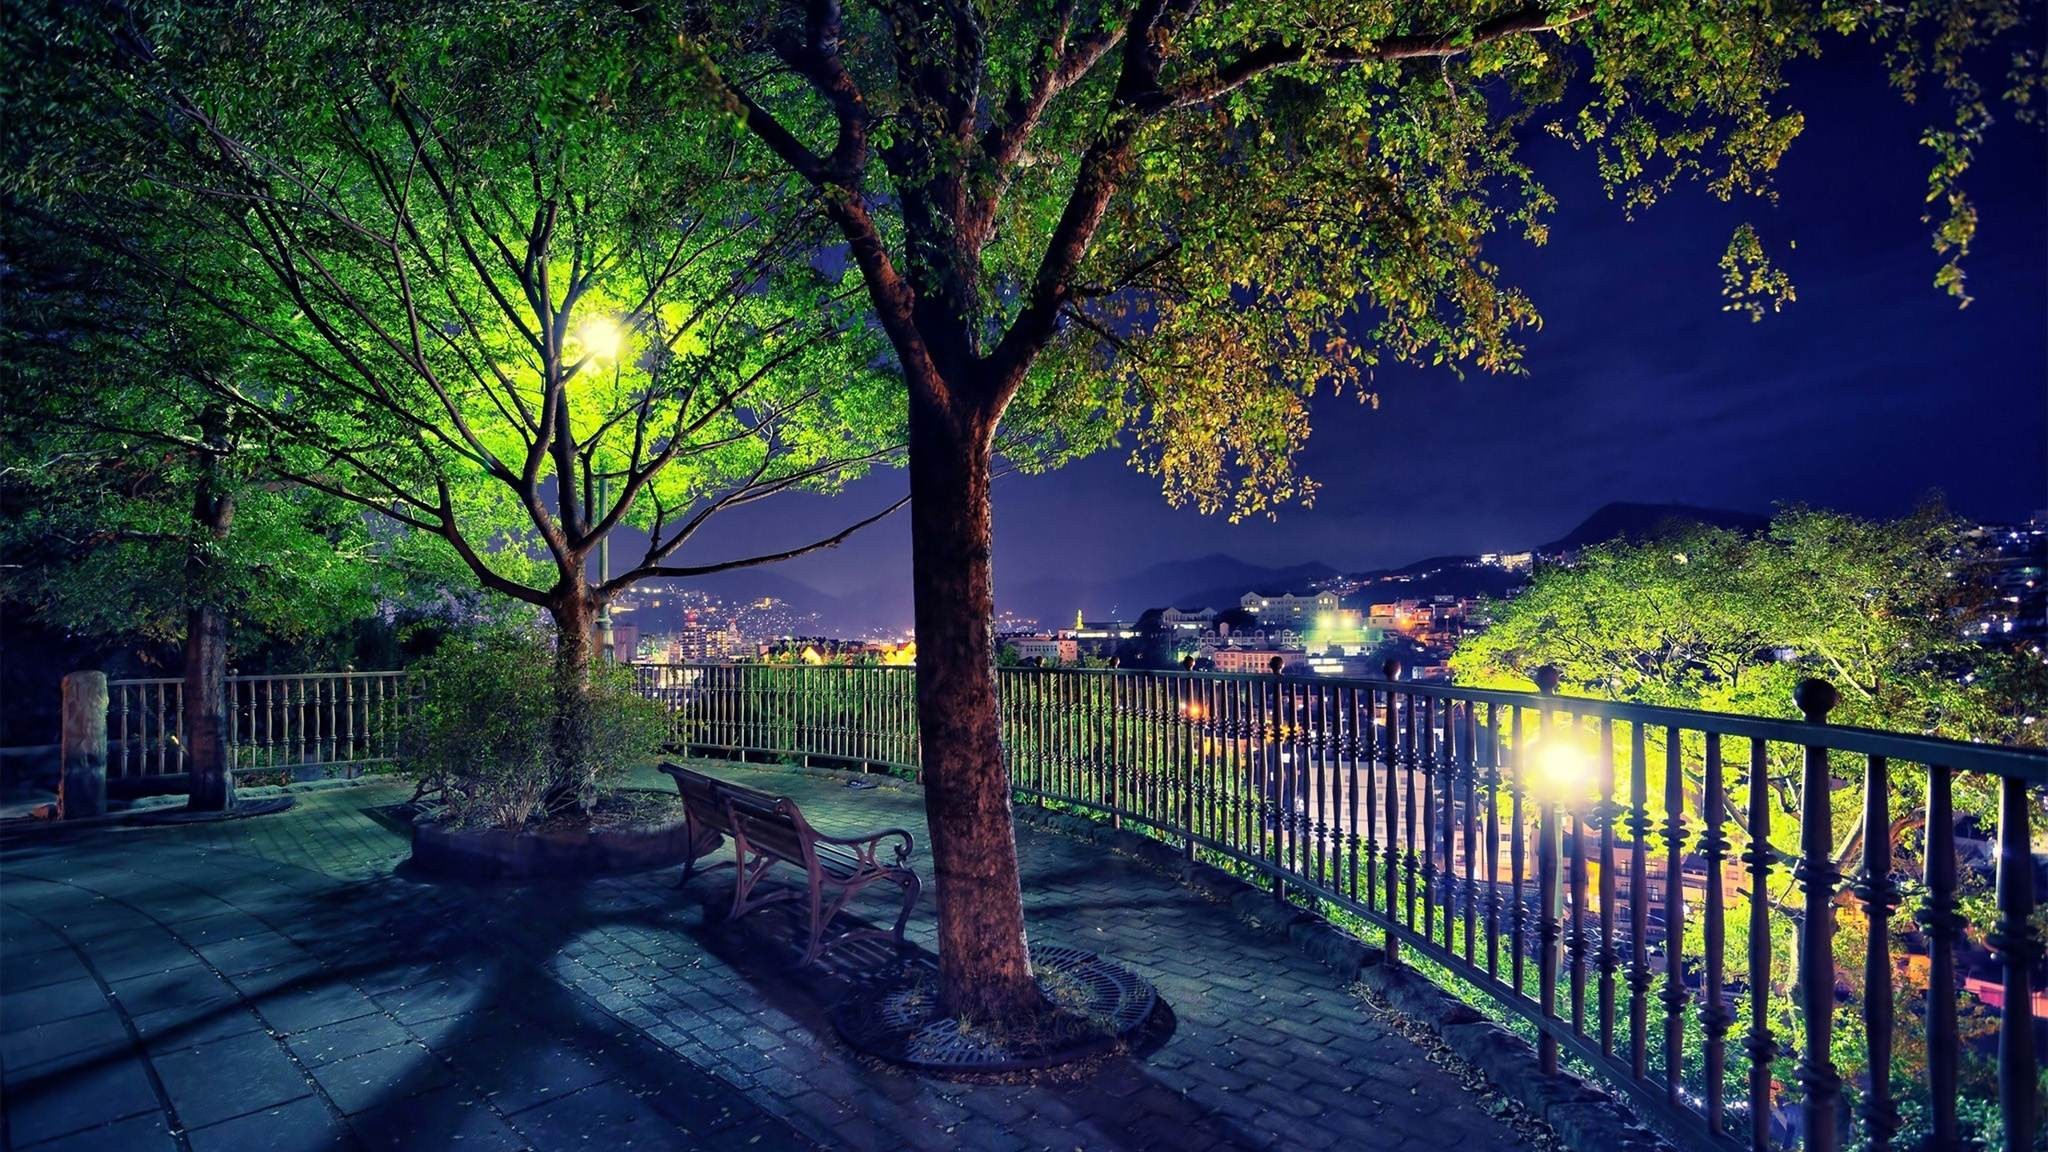 General 2048x1152 trees cityscape night bench lantern